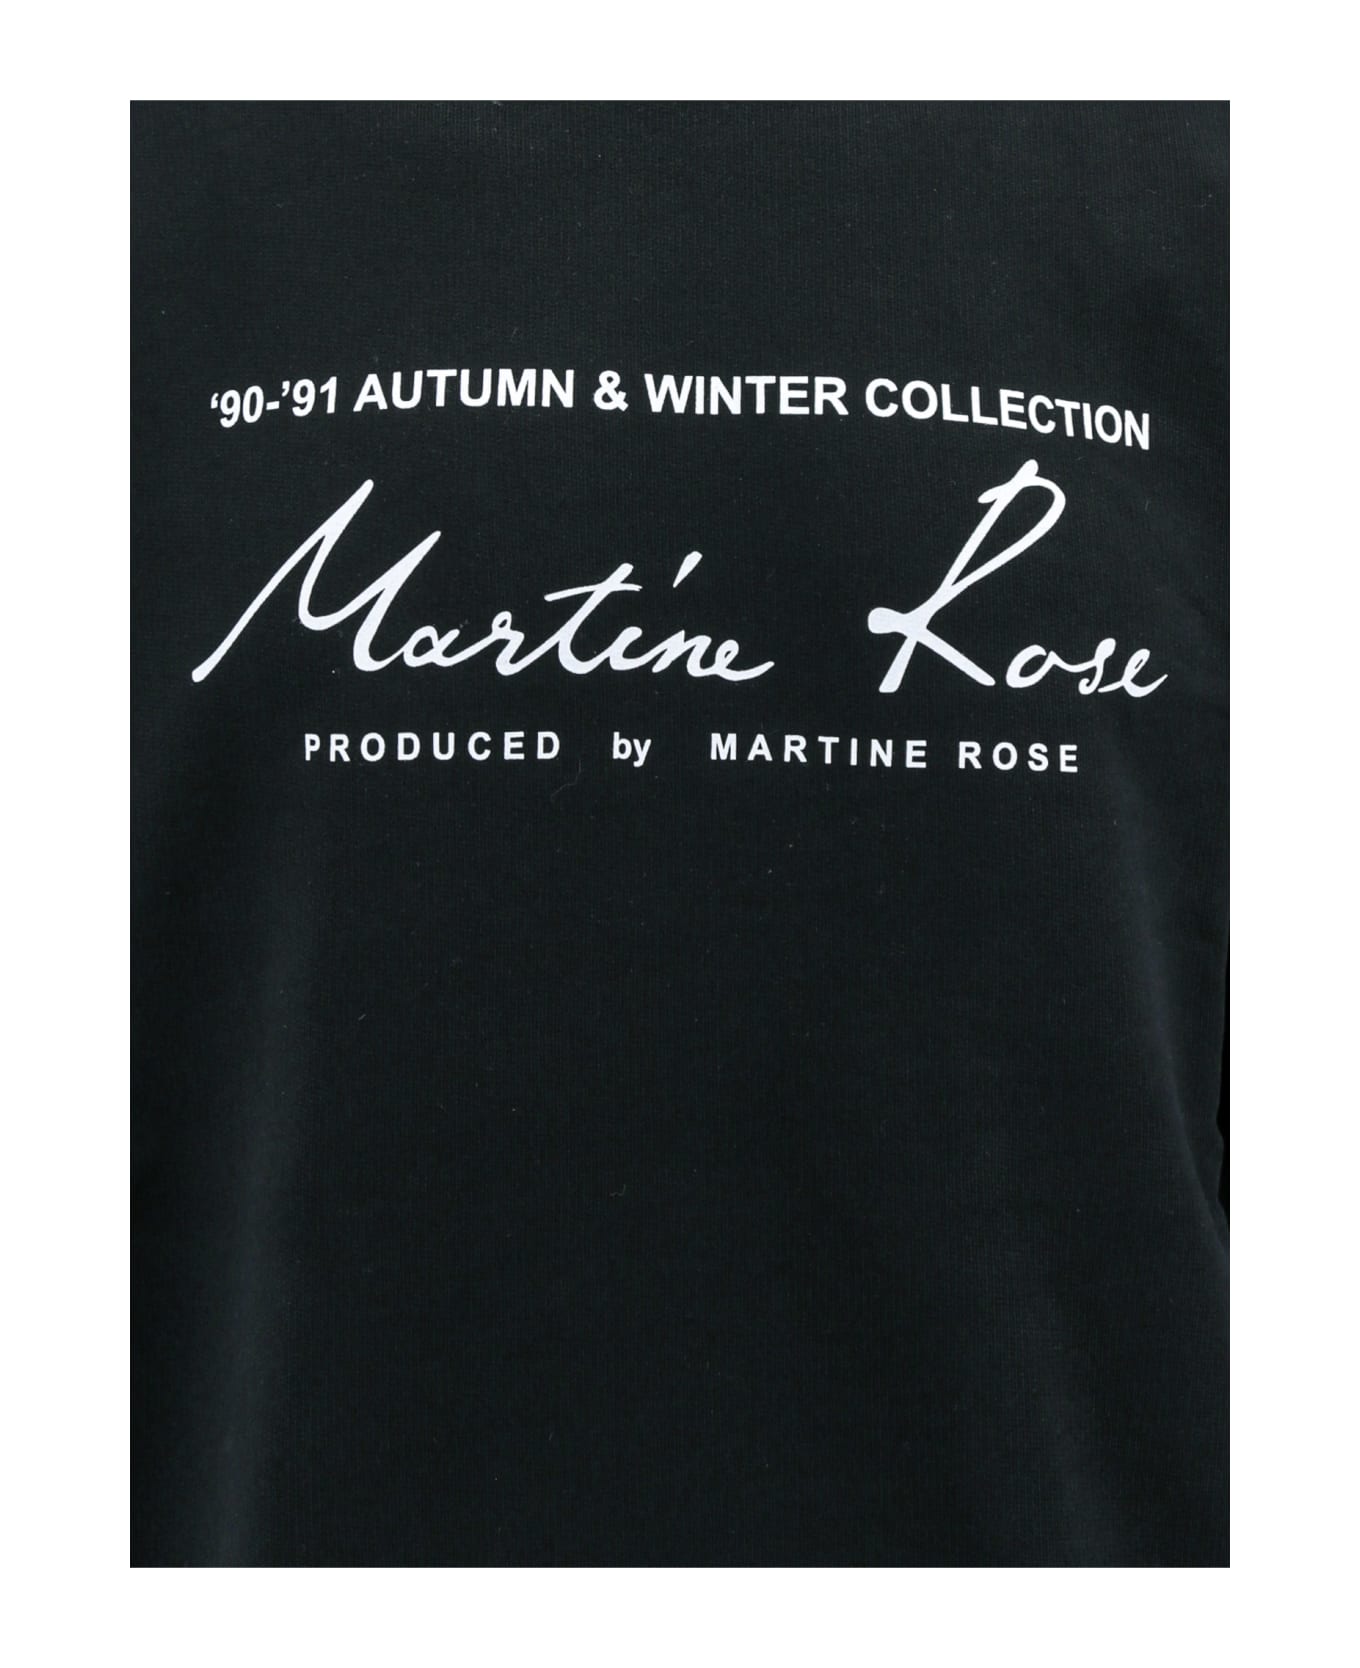 Martine Rose Sweatshirt - Black